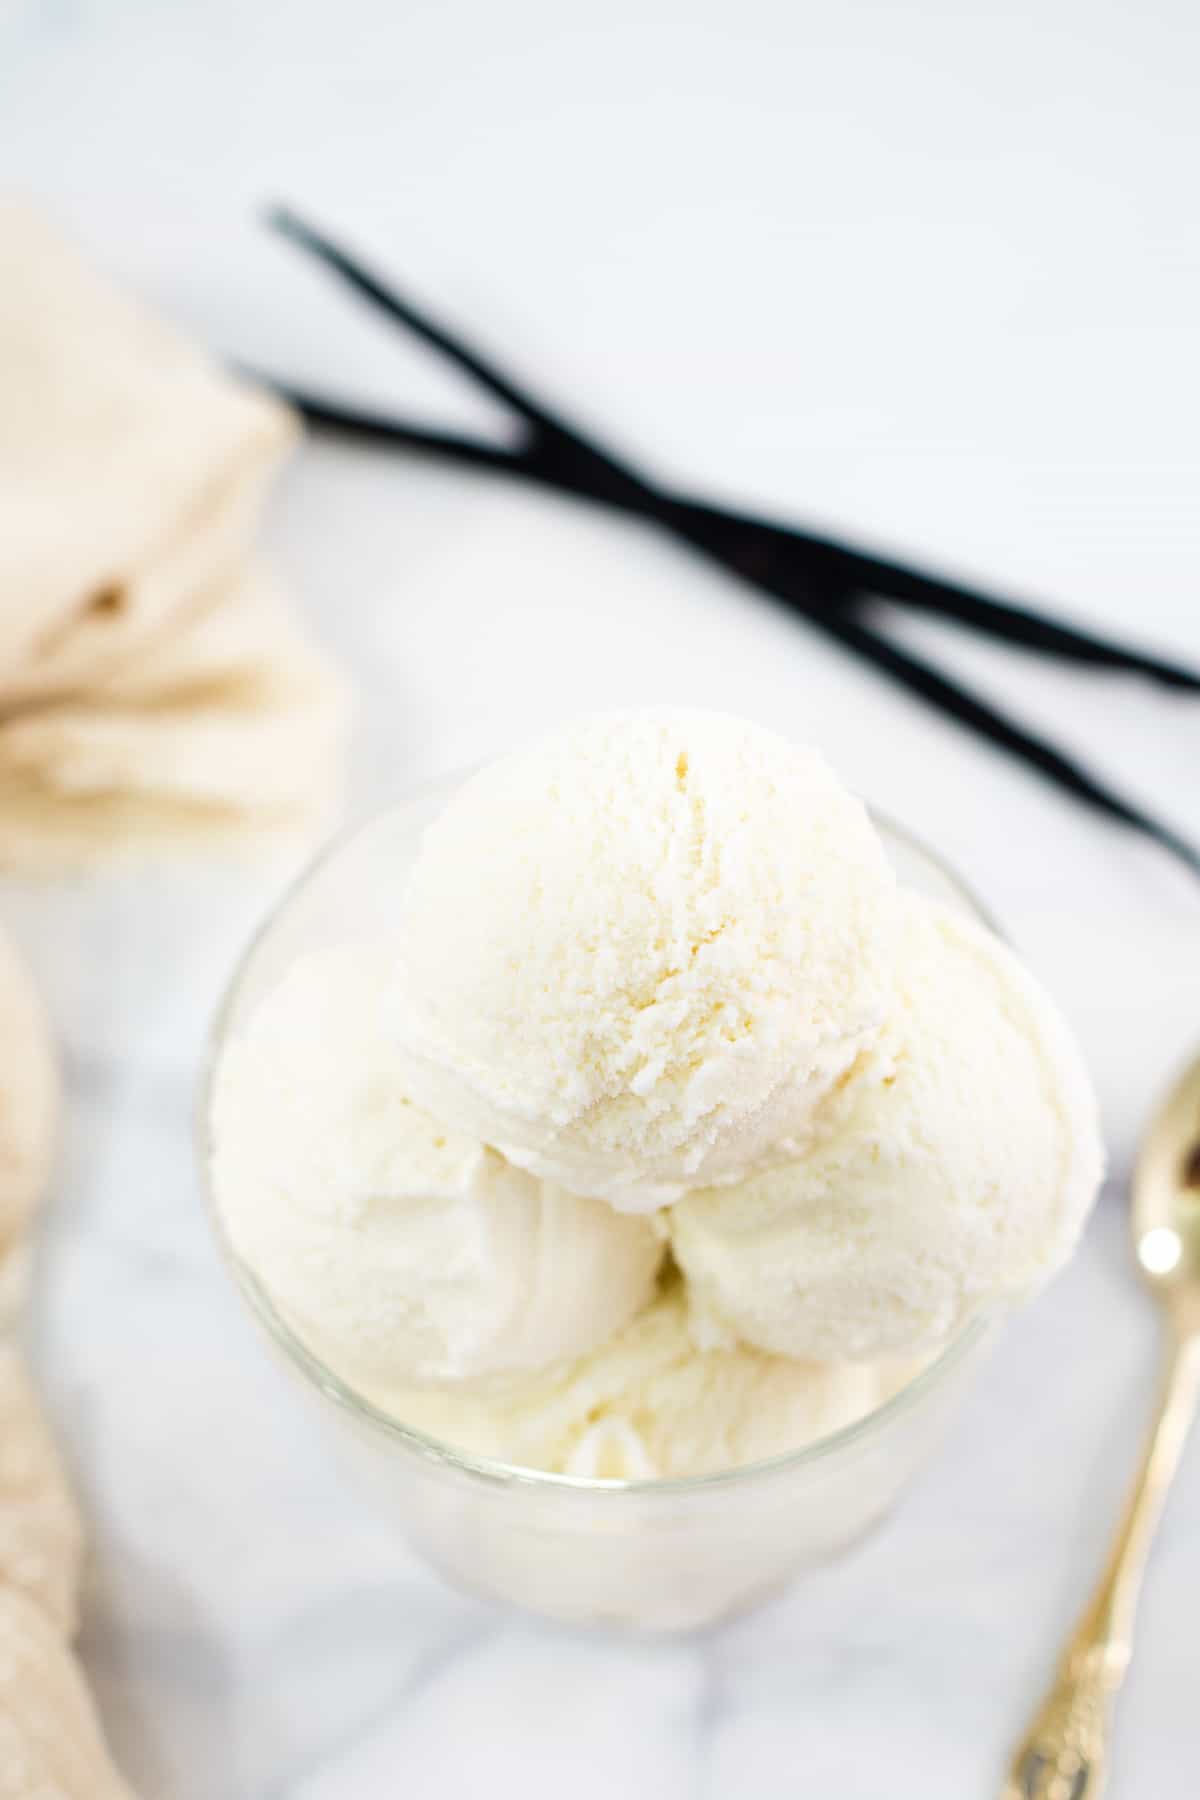 Top view of churned vanilla ice cream.